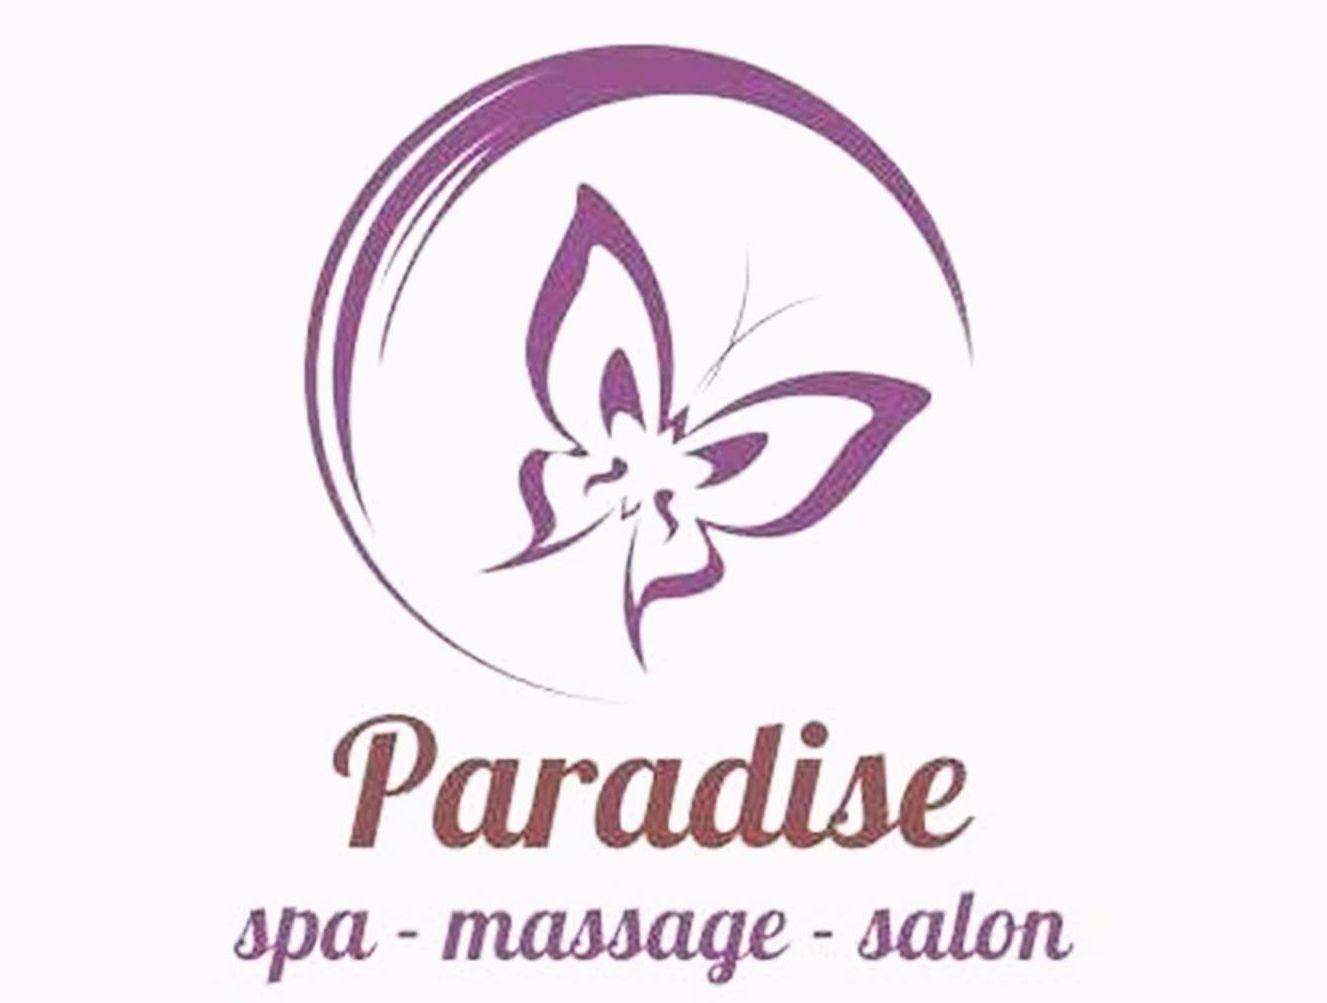 Paradise Salon Logo - Paradise Spa & Salon Downtown Association